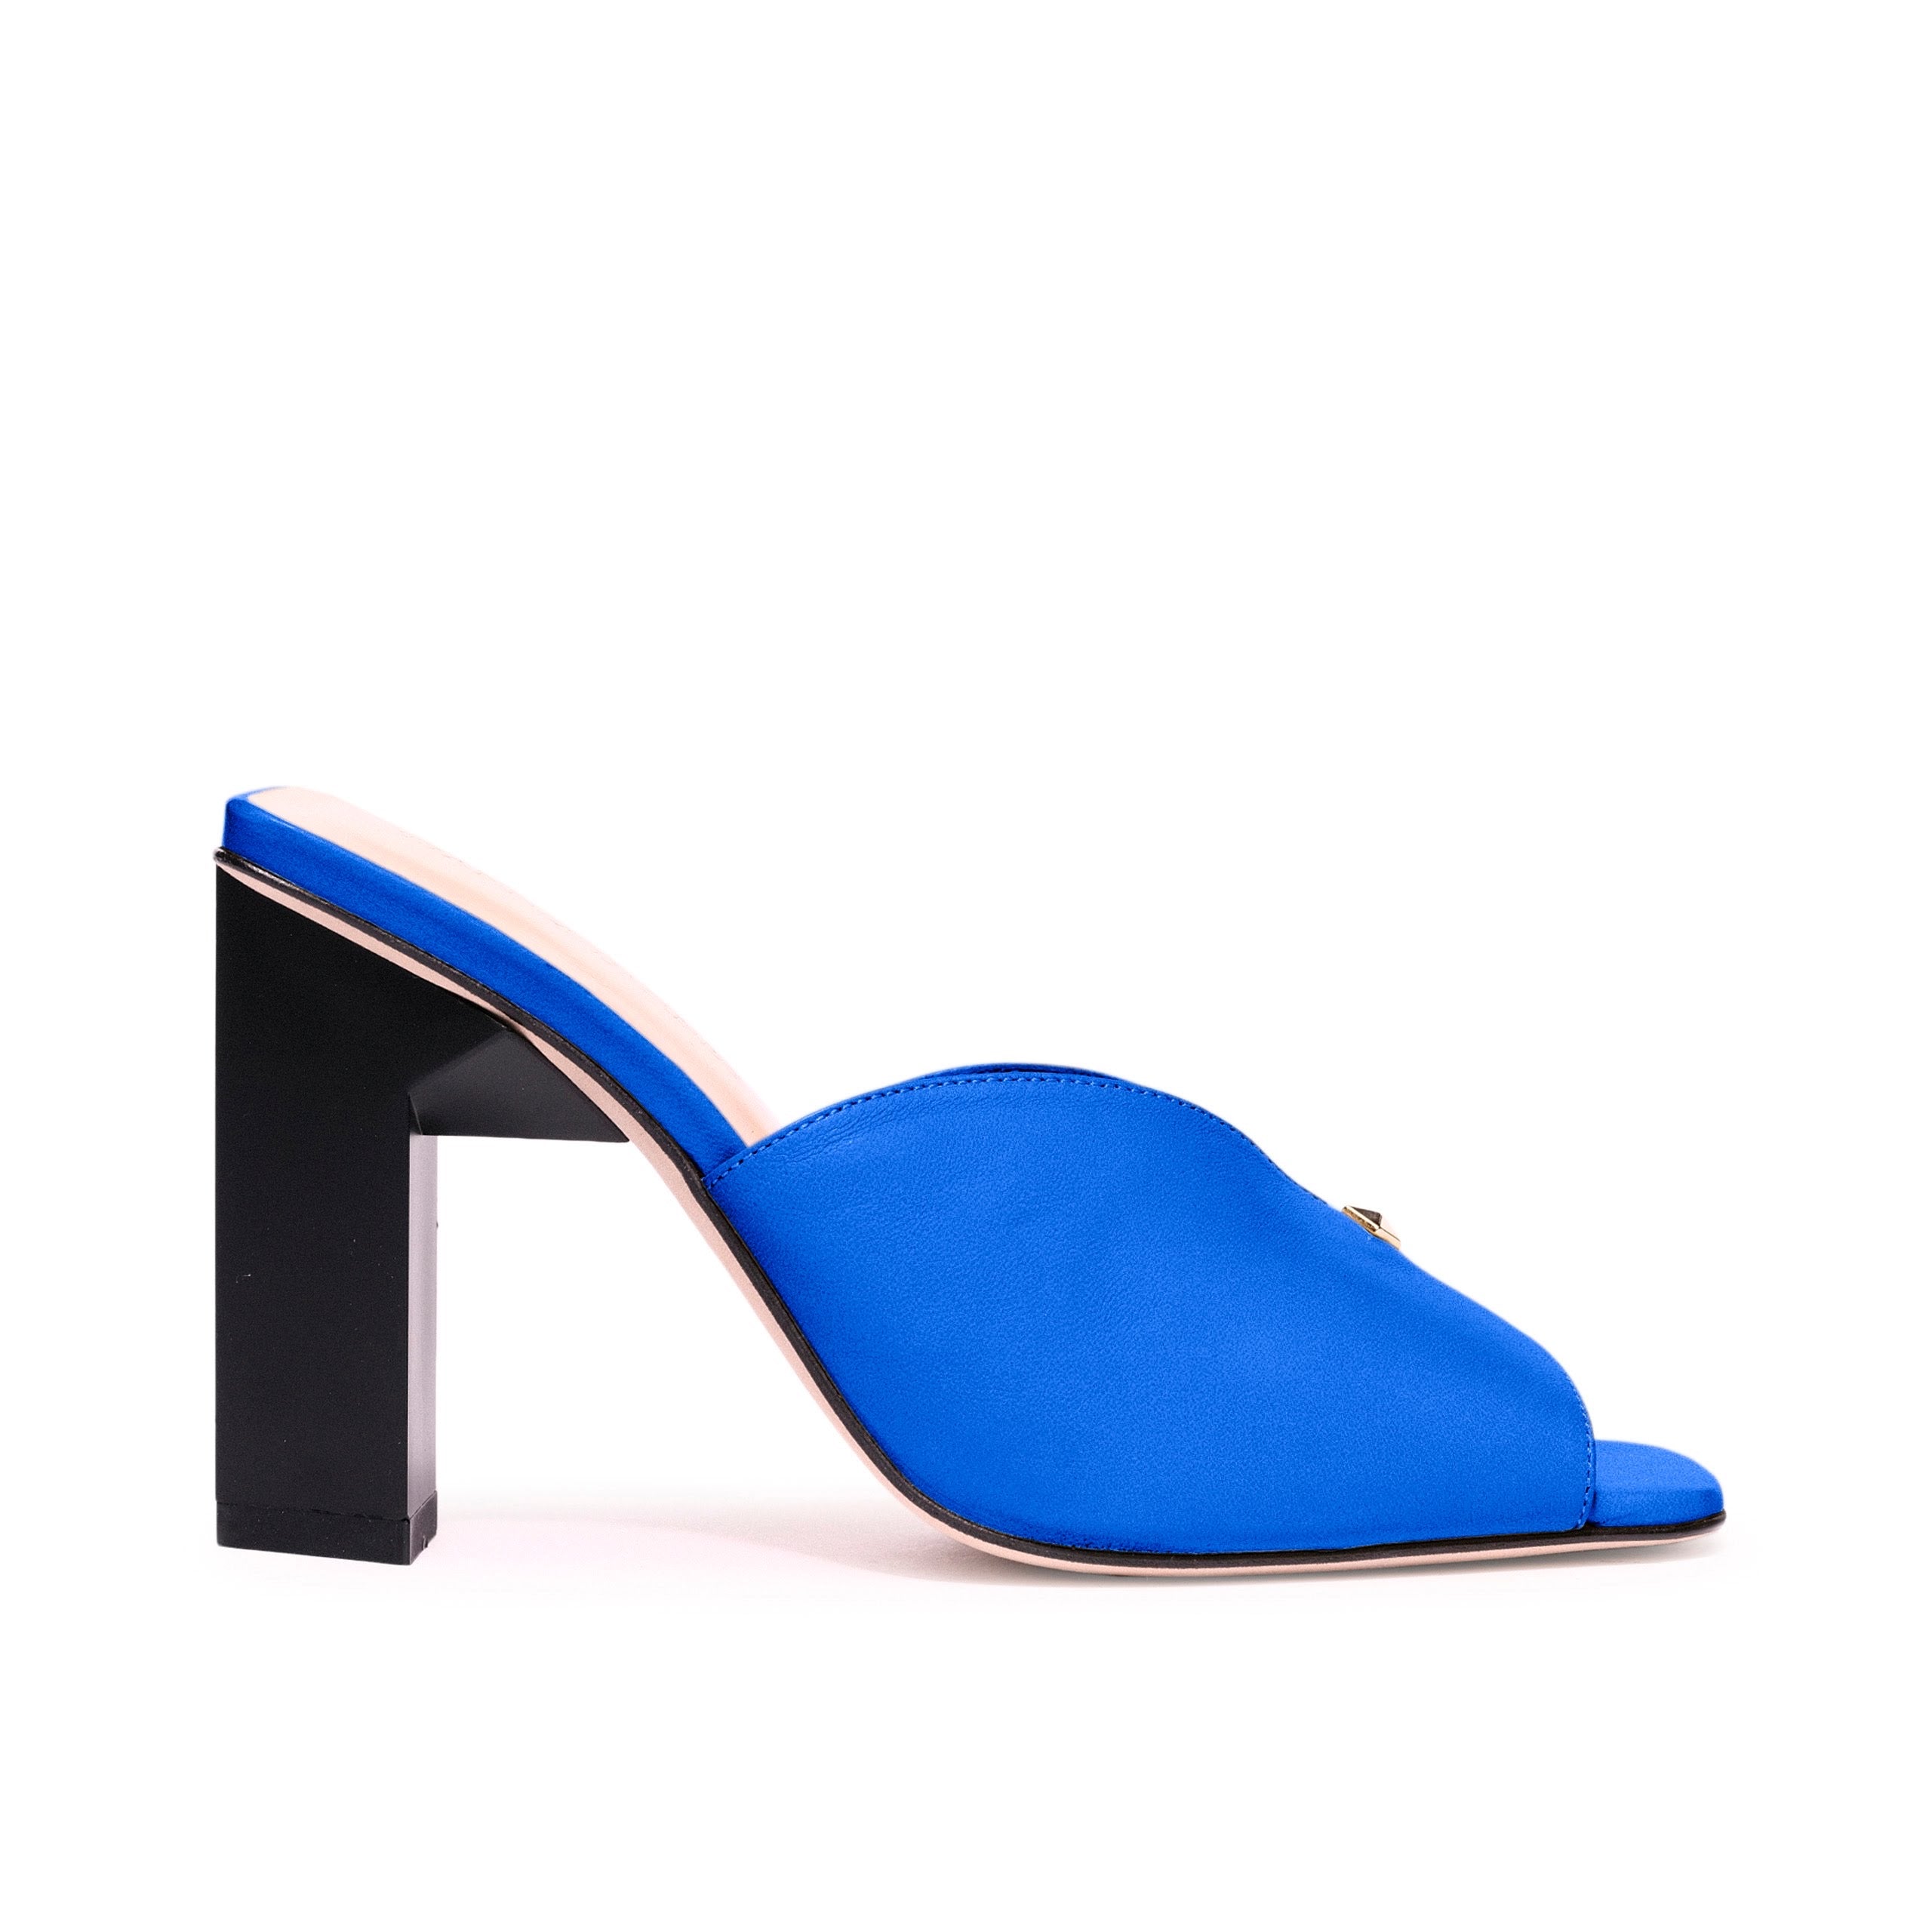 ASOS DESIGN Nimble slim platform high heeled sandals in blue | ASOS